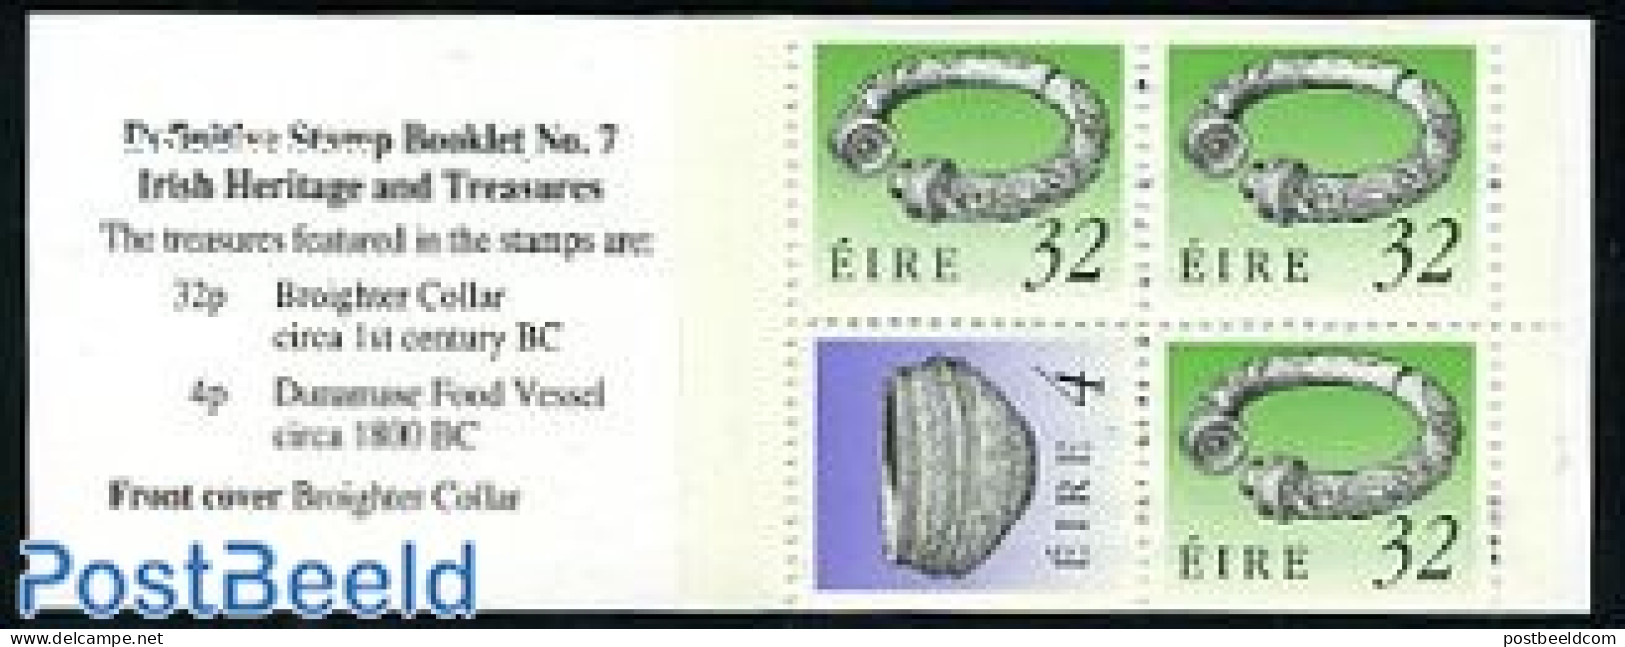 Ireland 1995 Irish Art Booklet, Mint NH, Stamp Booklets - Art - Art & Antique Objects - Ungebraucht